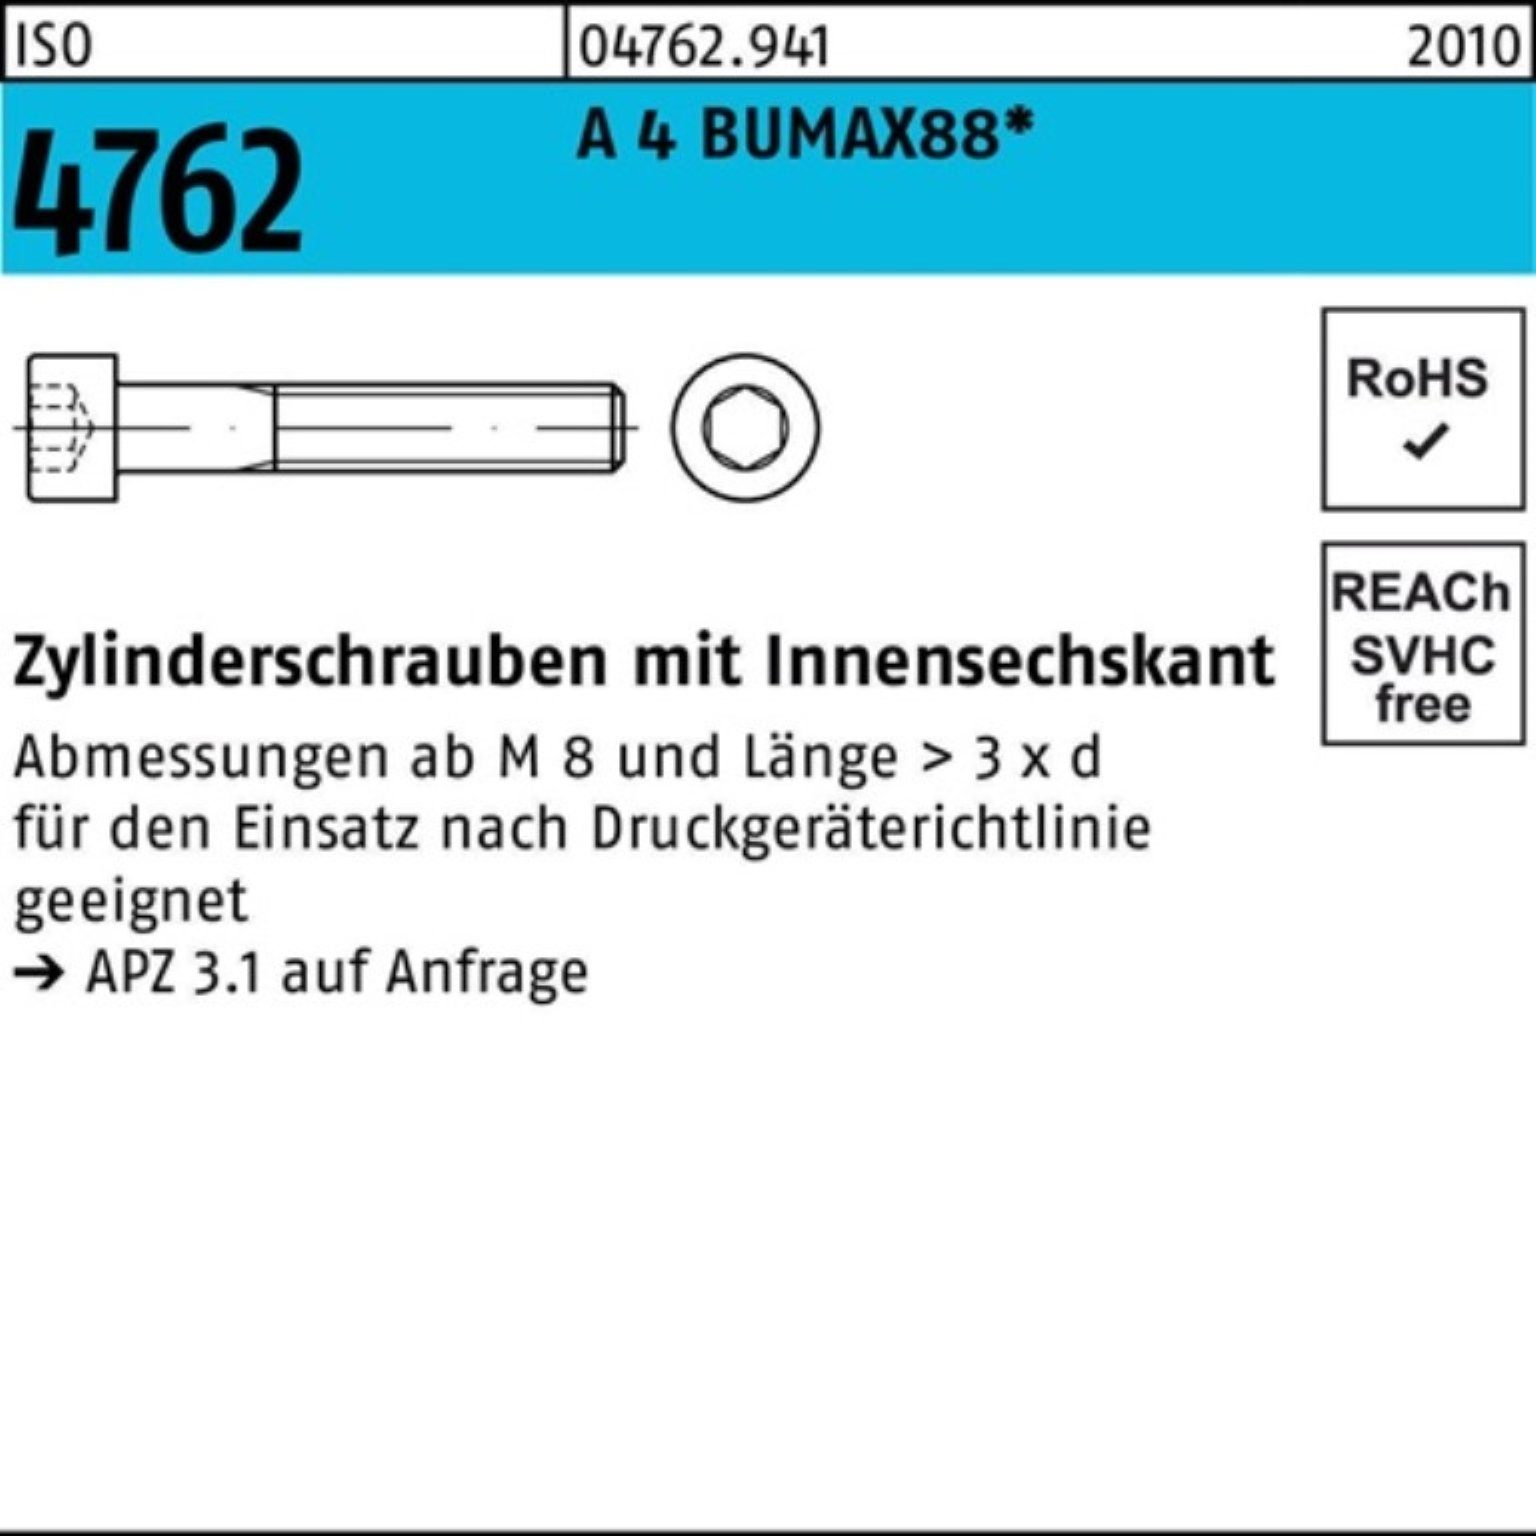 Bufab Zylinderschraube 100er 4 Zylinderschraube 4762 ISO Innen-6kt BUMAX88 50 Pack A M12x 25